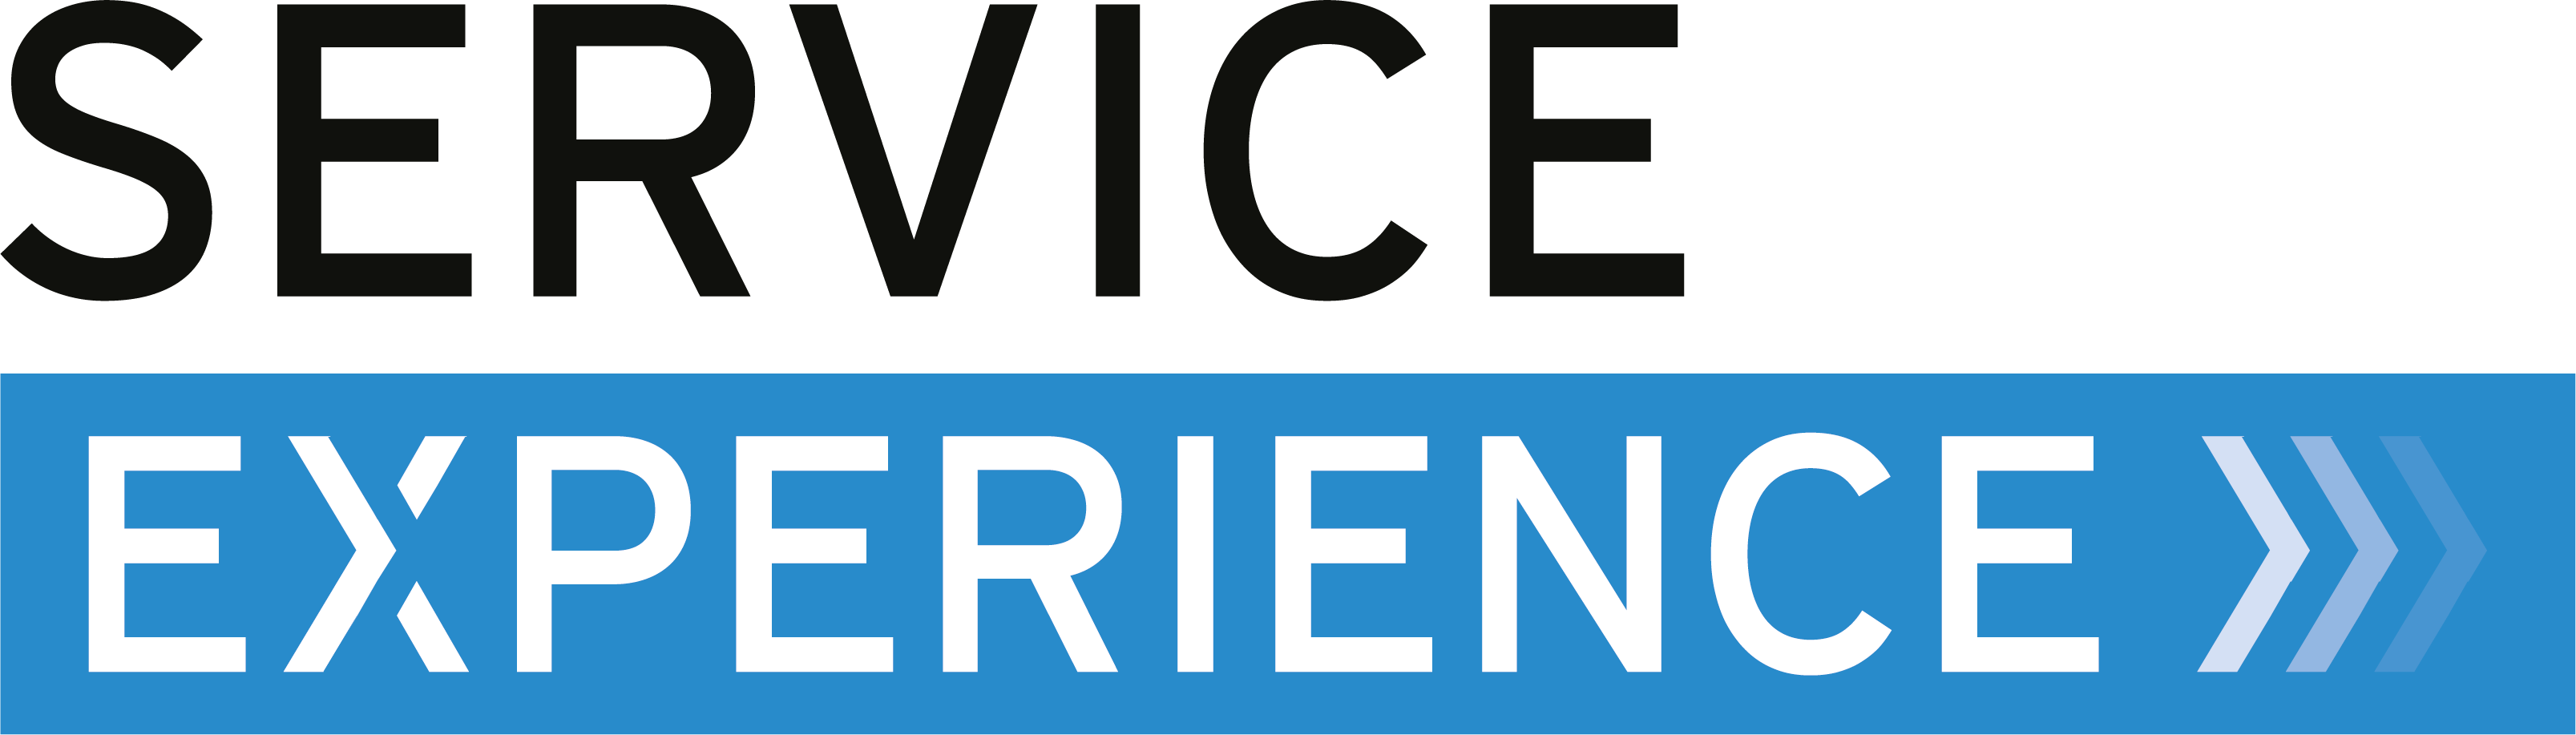 Logo Service Expérience